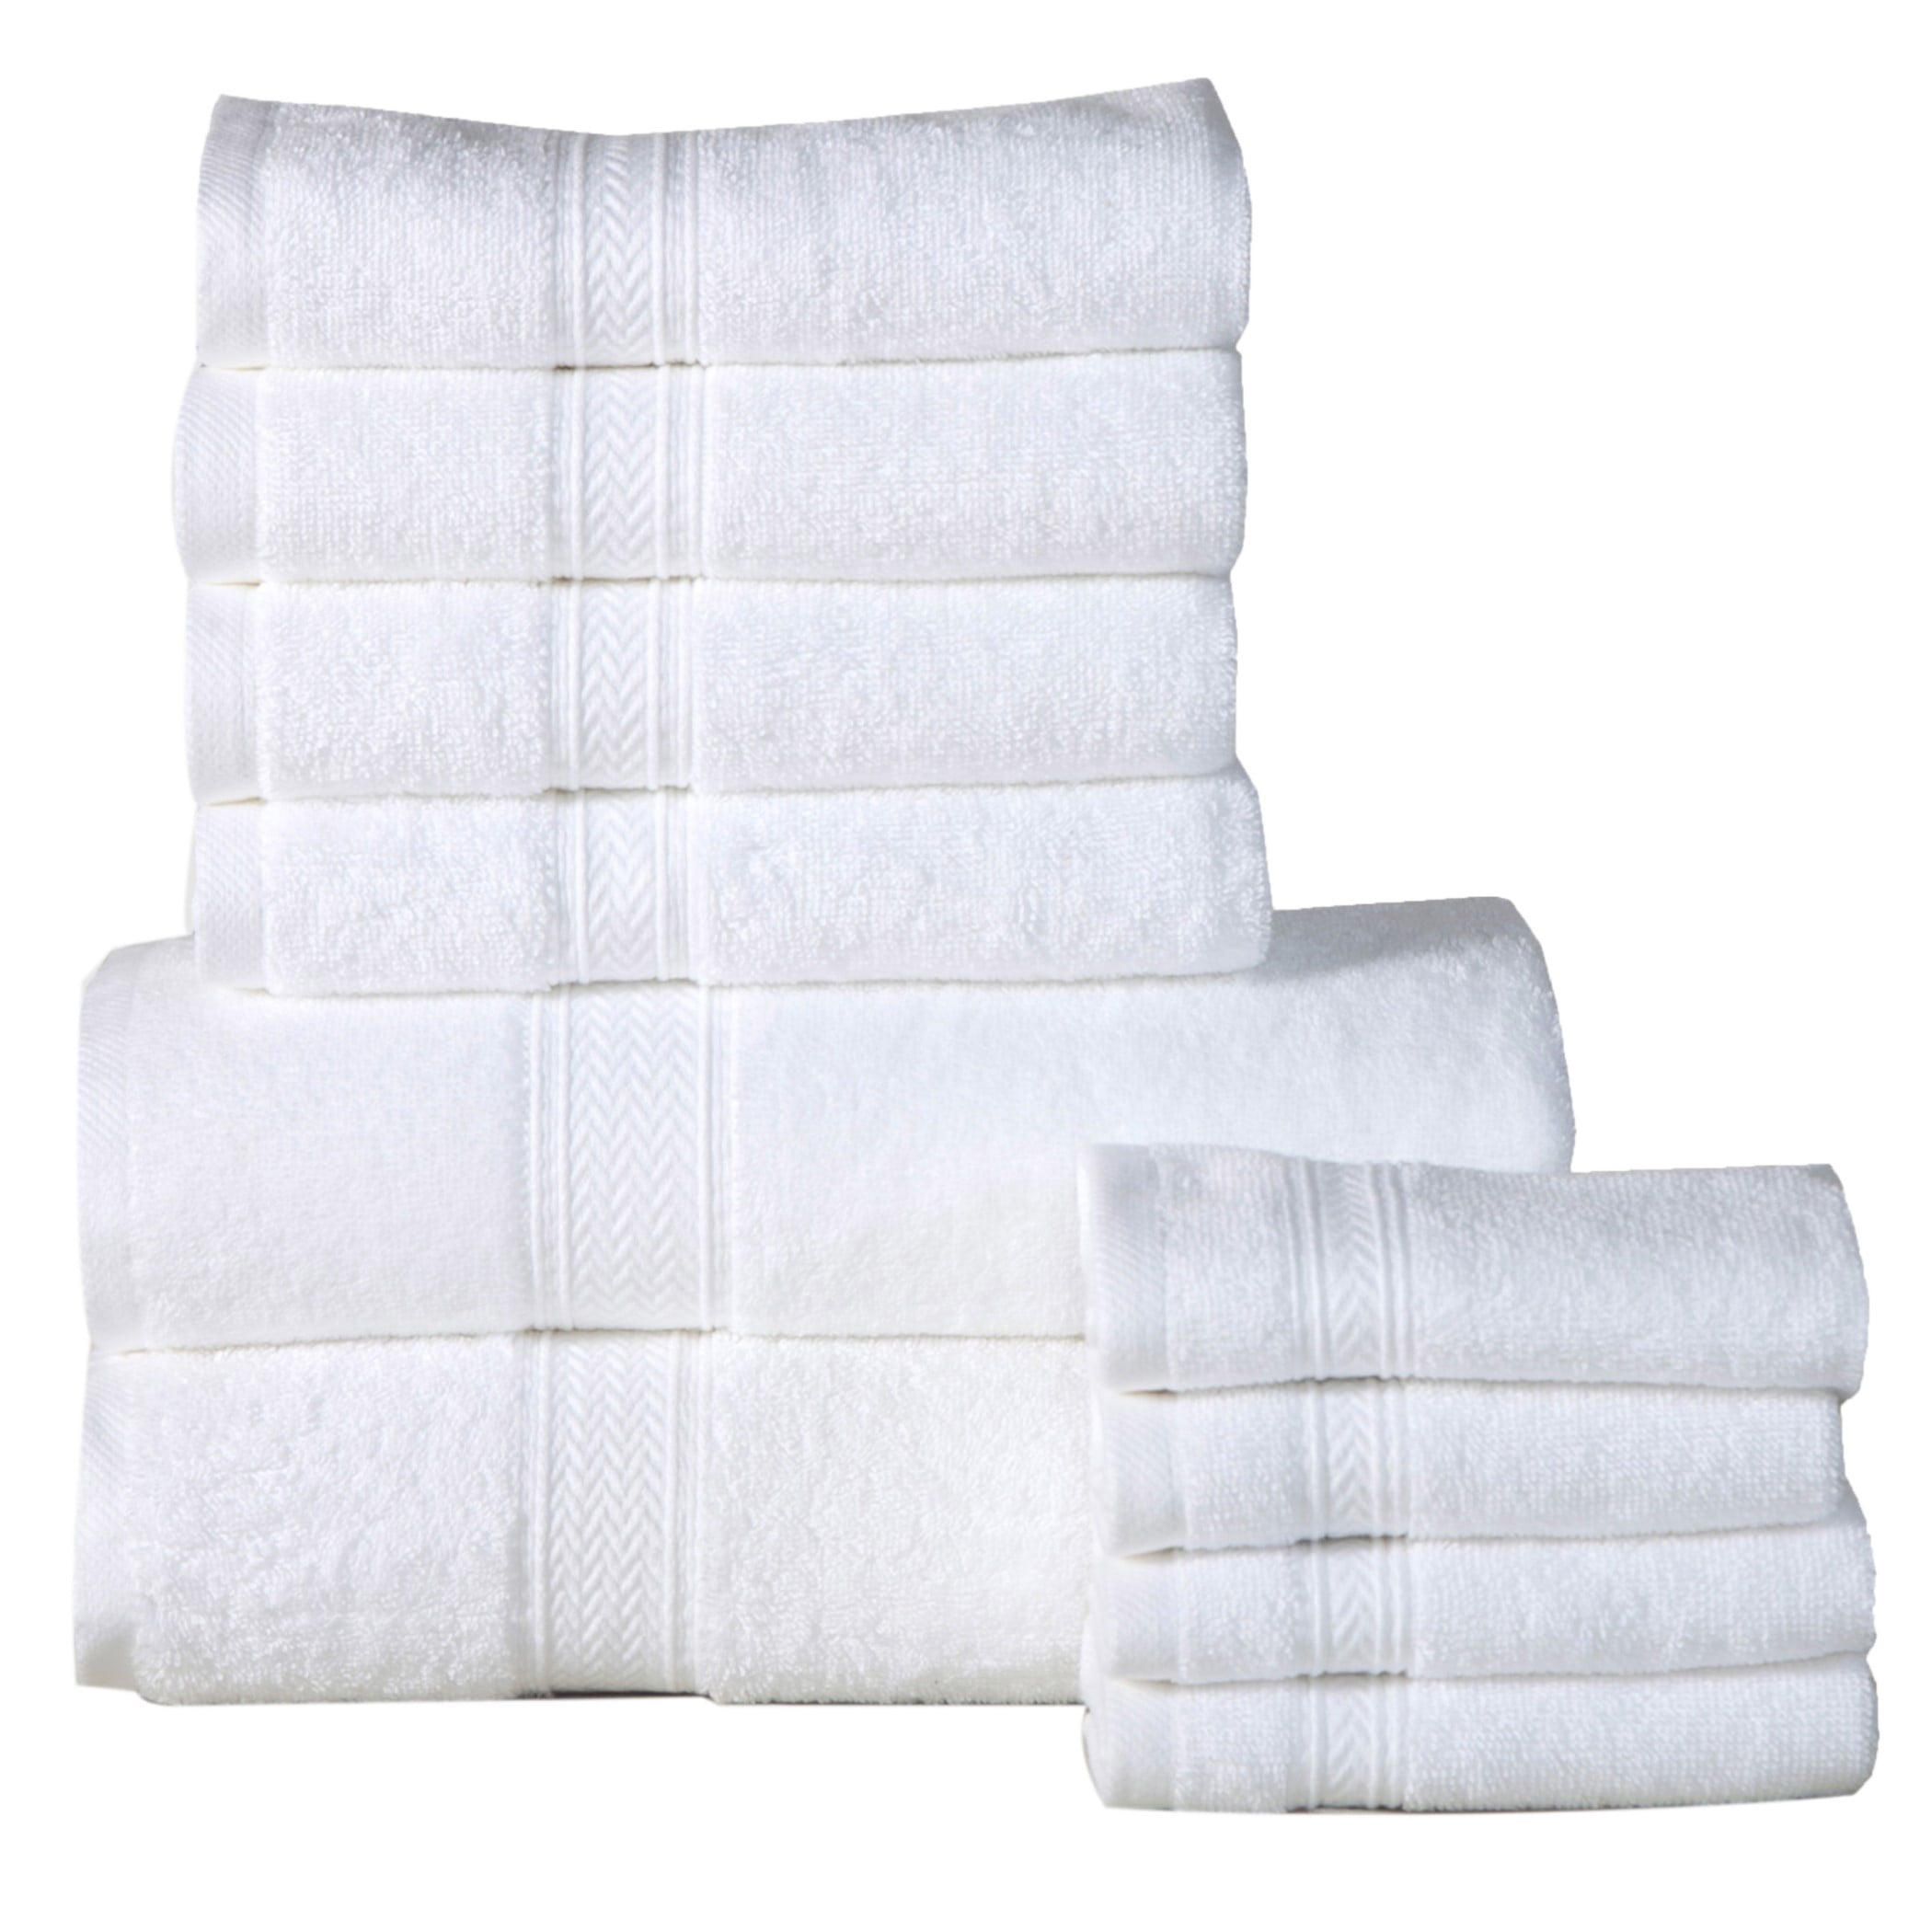 MARTEX 7131798 Wash Towel,Cotton/Polyester,1 lb.,PK12